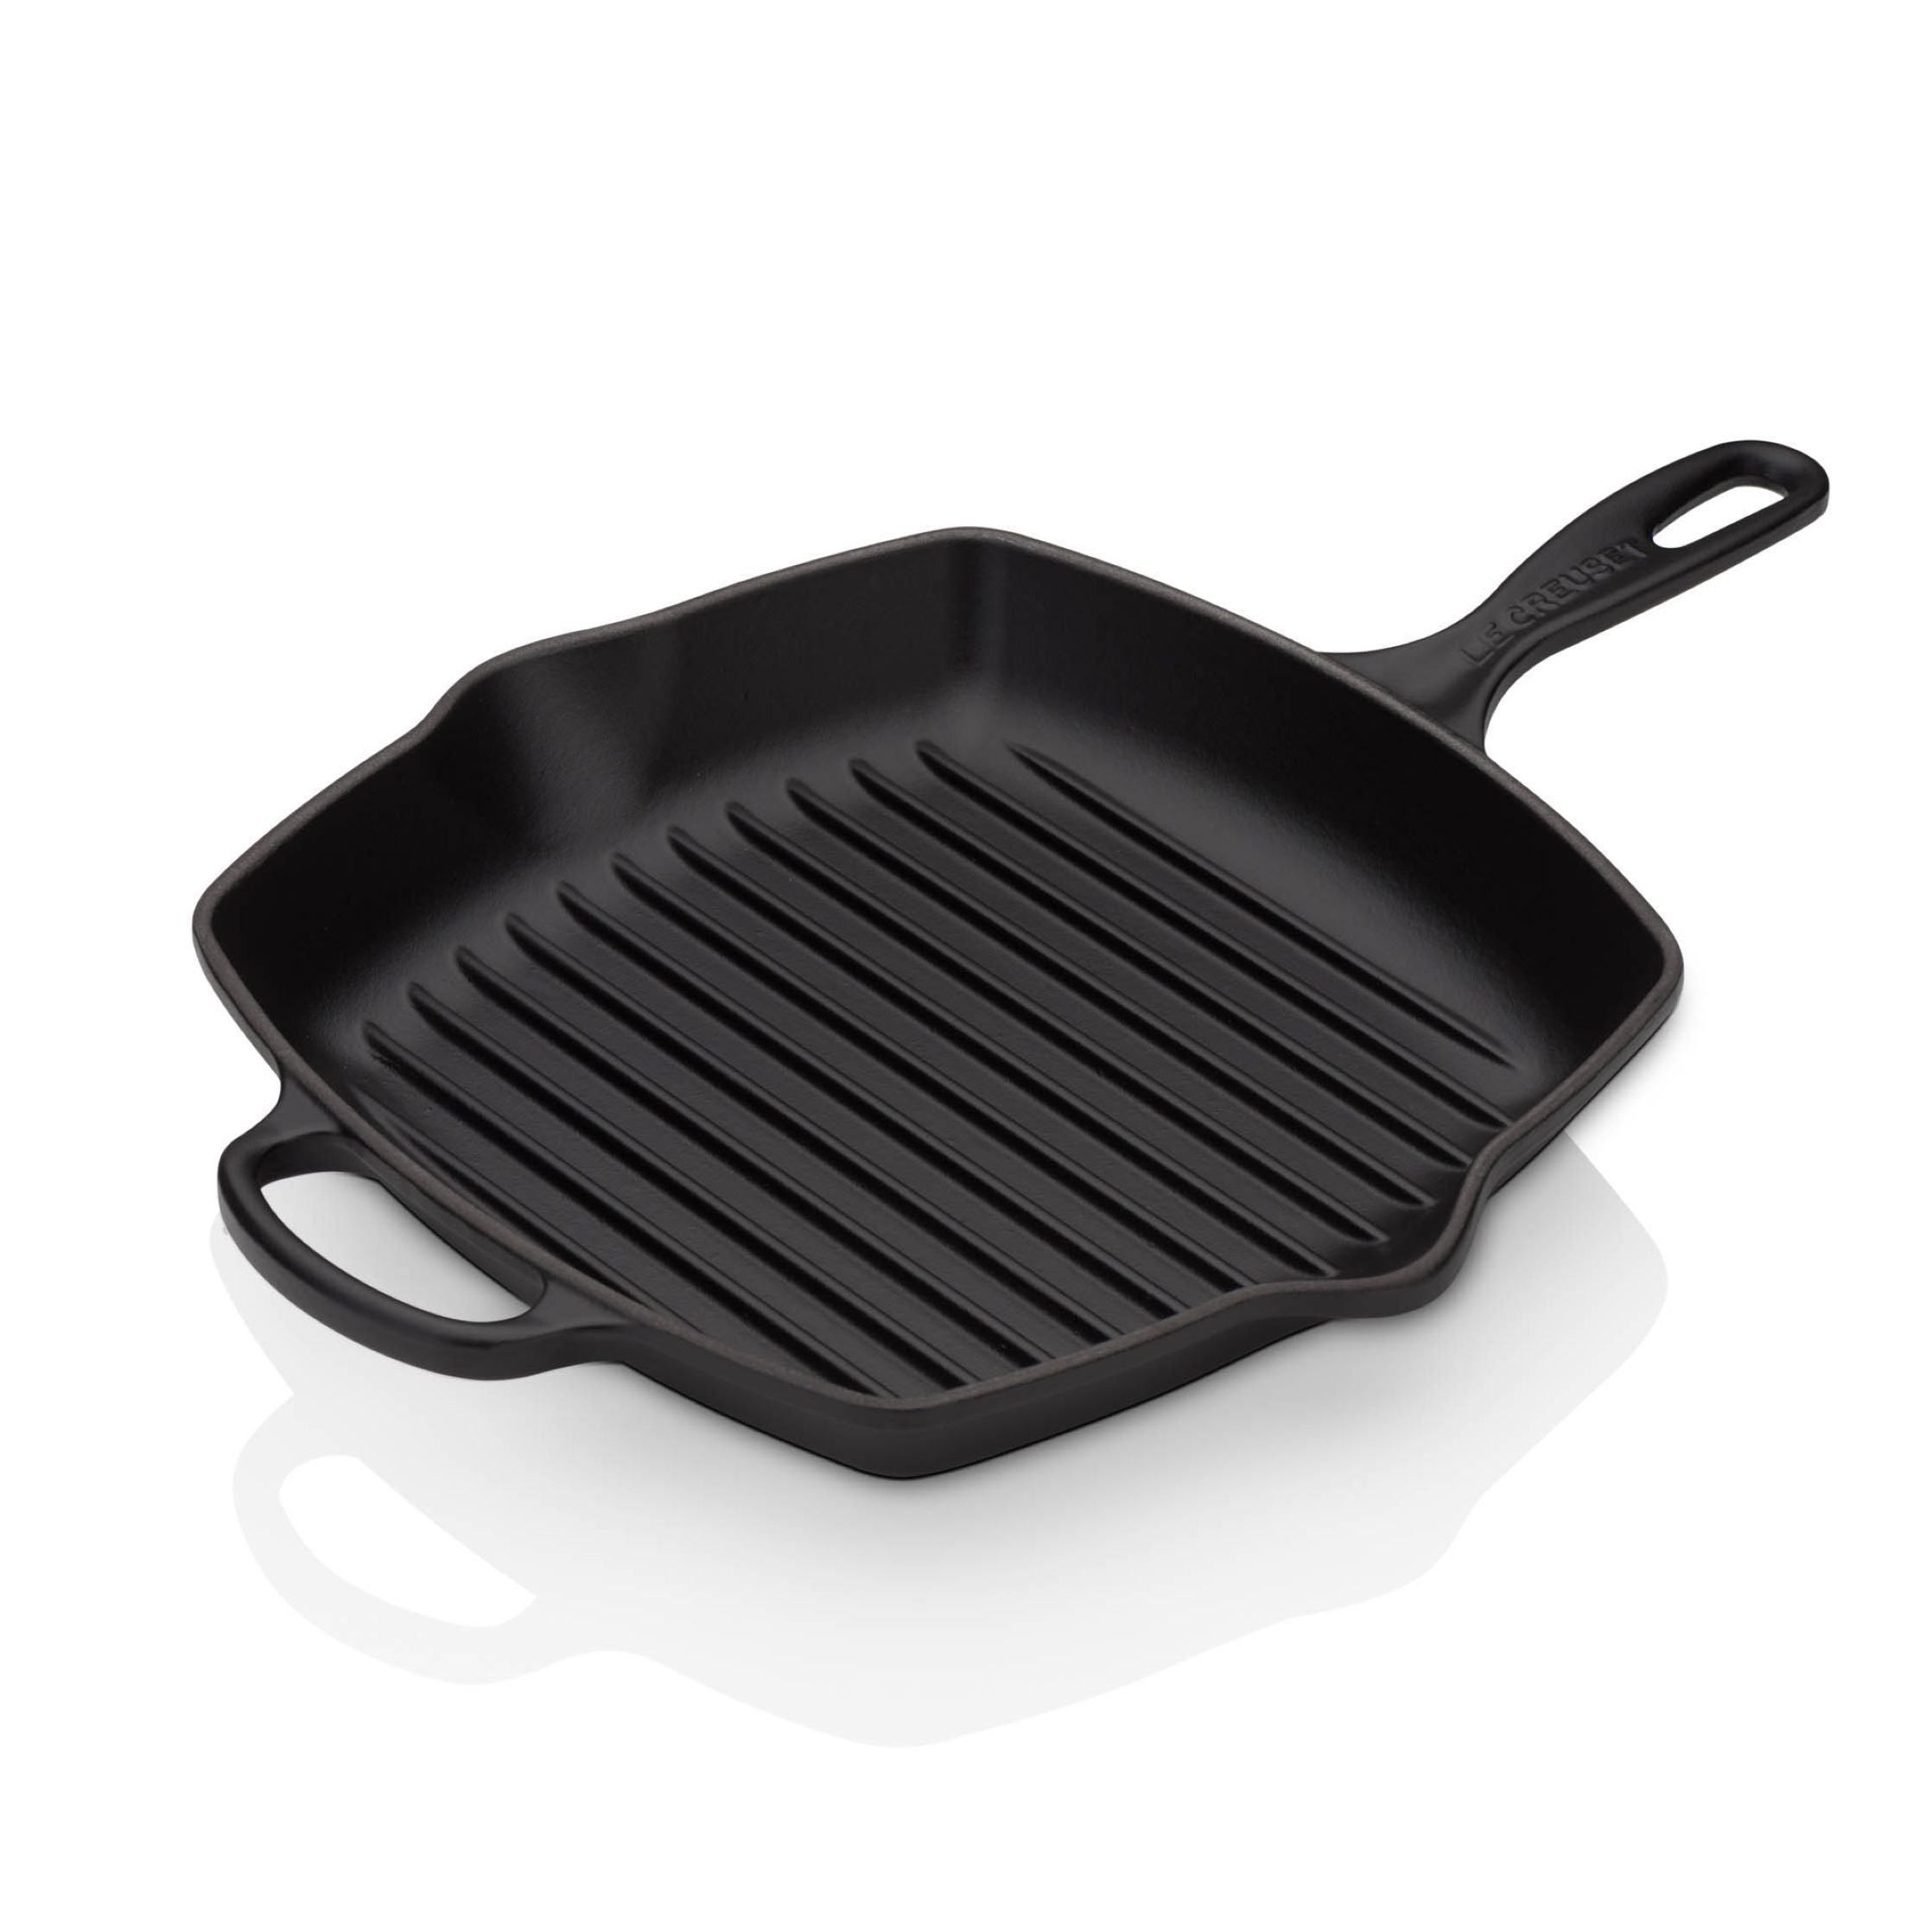 Le Creuset Signature Square Grill Pan de 26 cm, negro